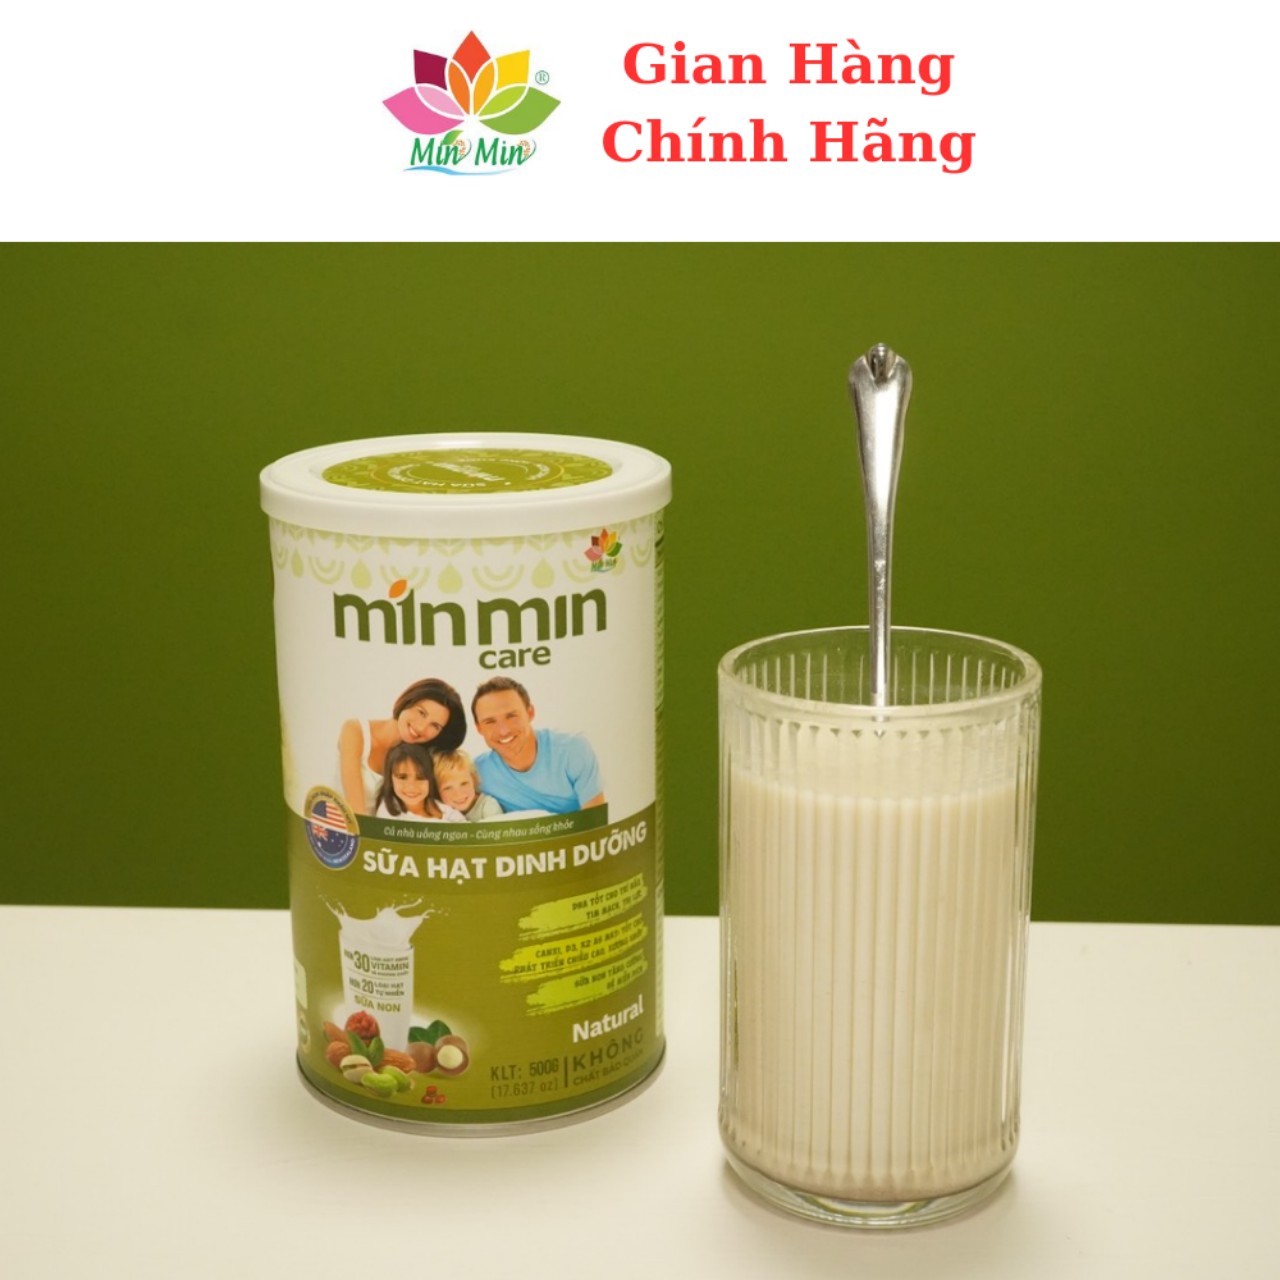 Combo 2 hộp Sữa Hạt Dinh Dưỡng Min Min Care (1Kg)